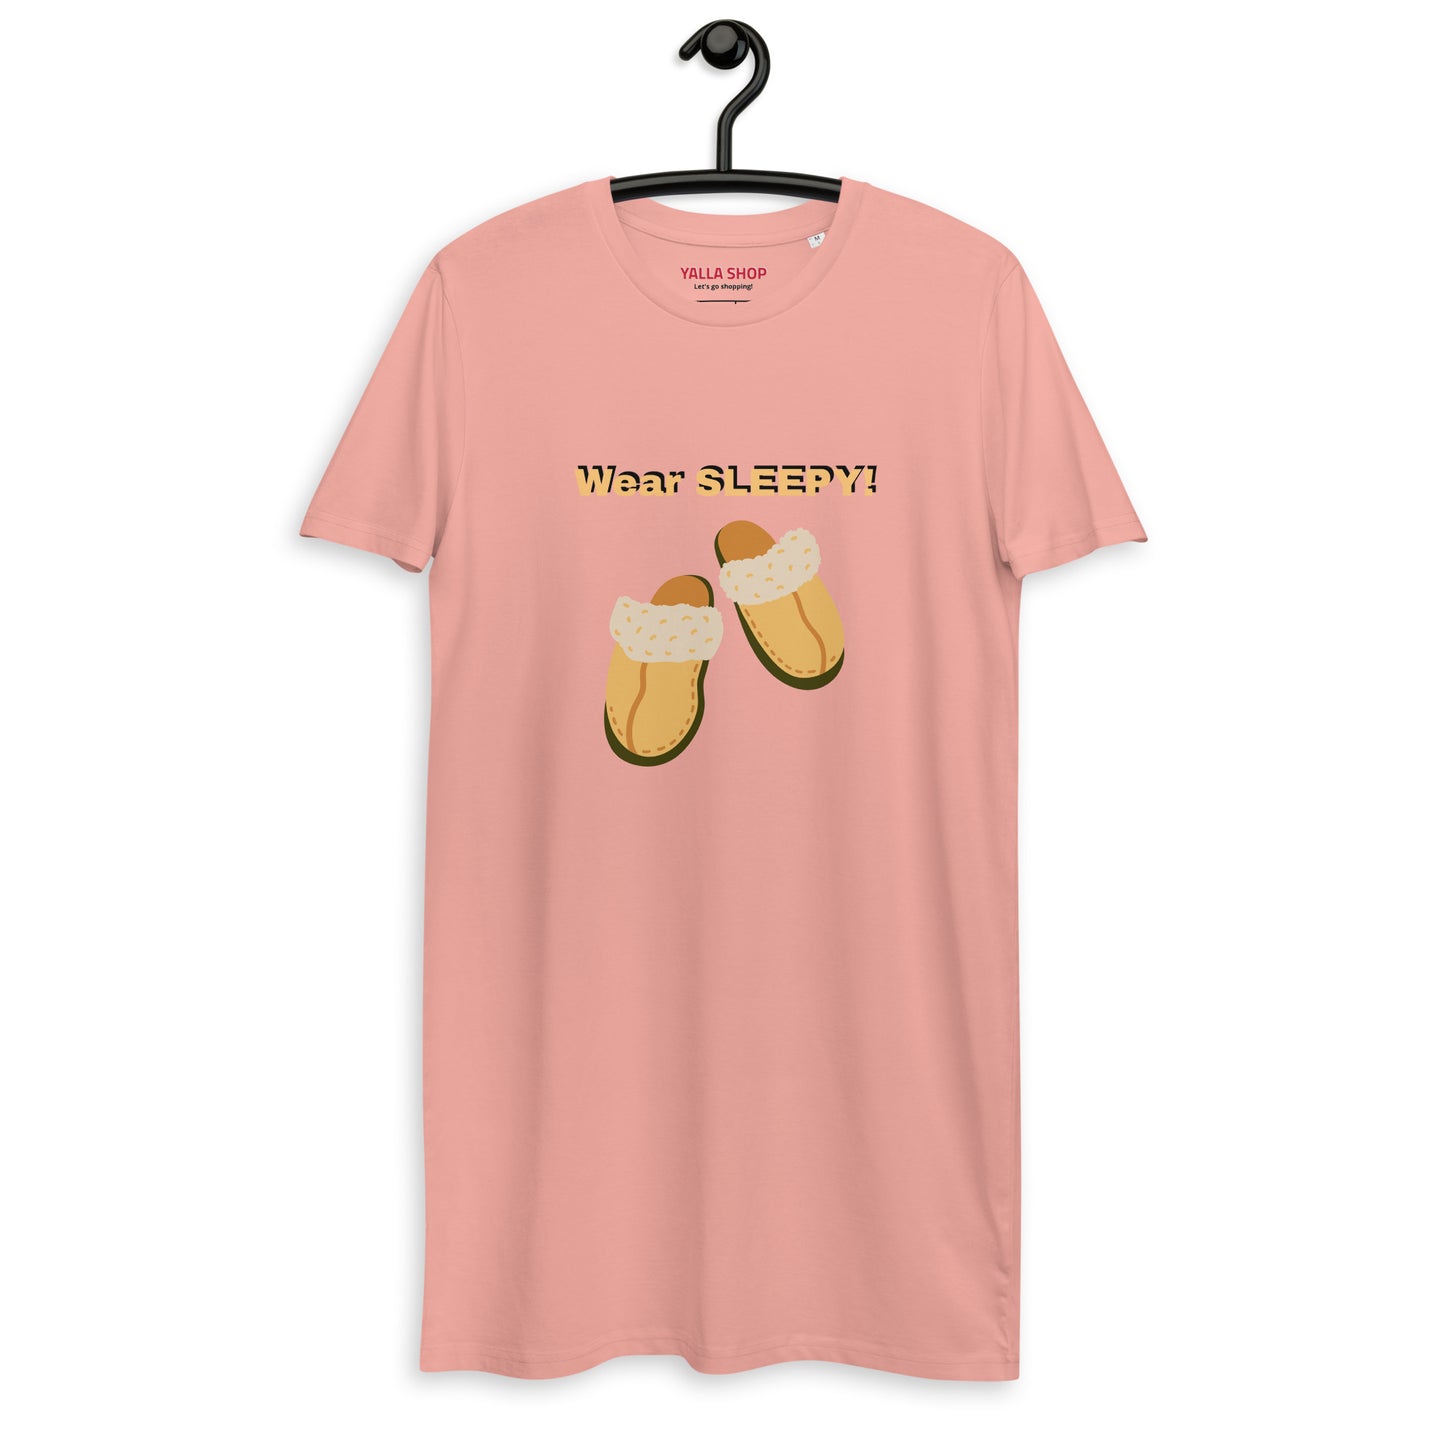 Slip into Sleep Tee - T-shirt dress